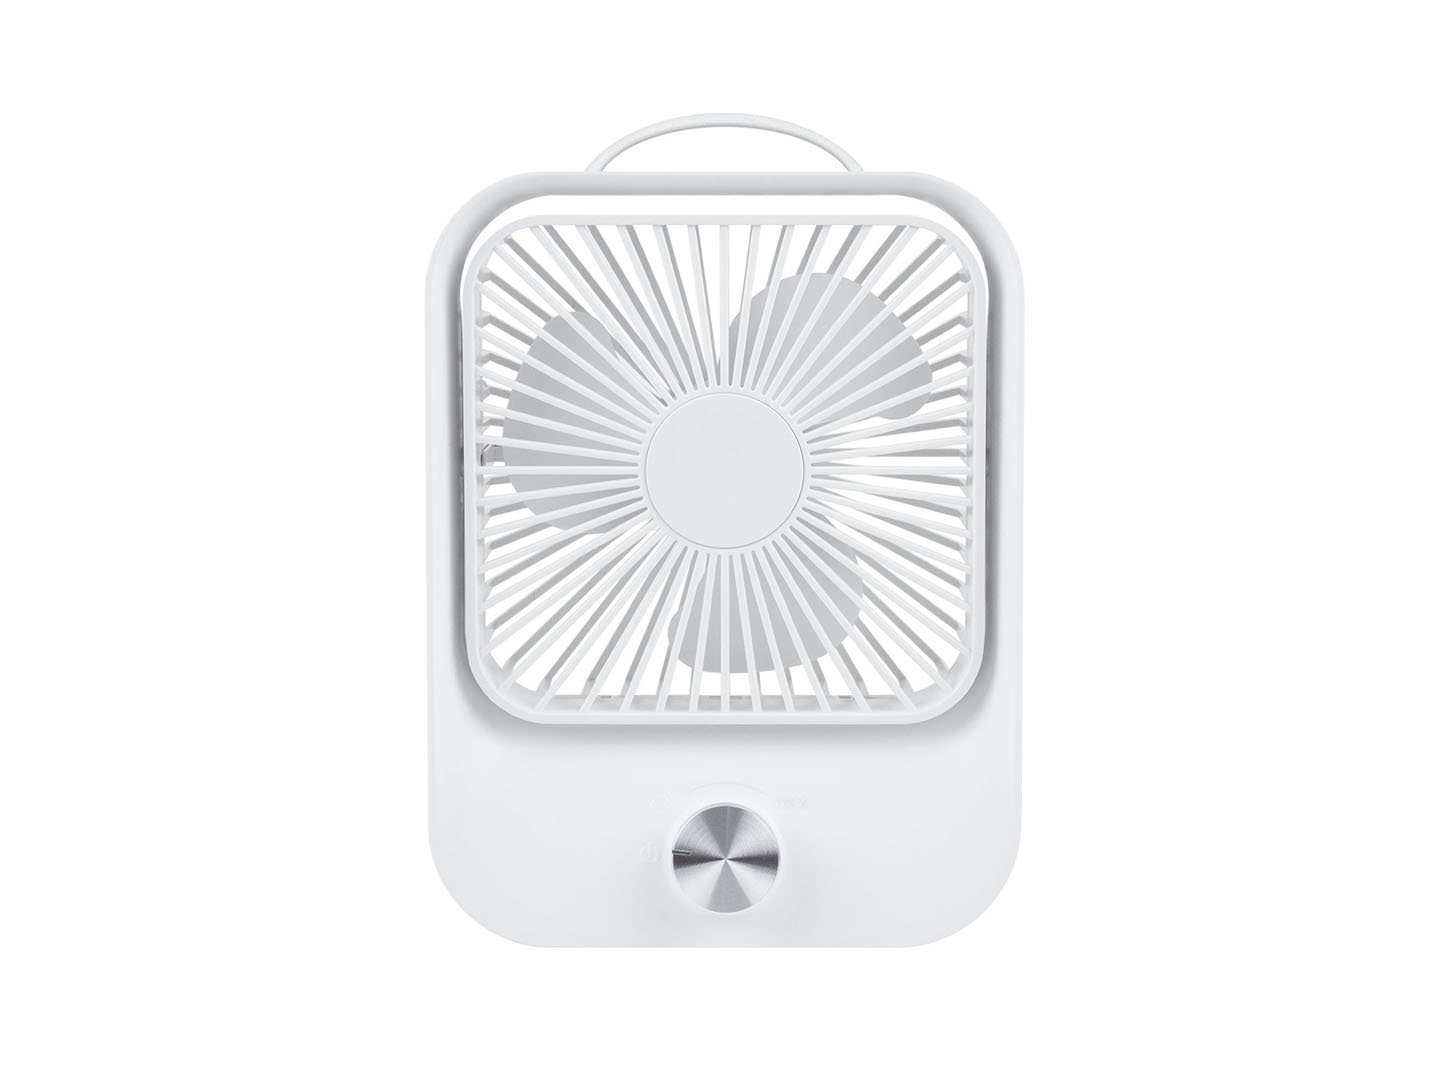 NEO Flow White Вентилятор портативный со встроенным аккумулятором